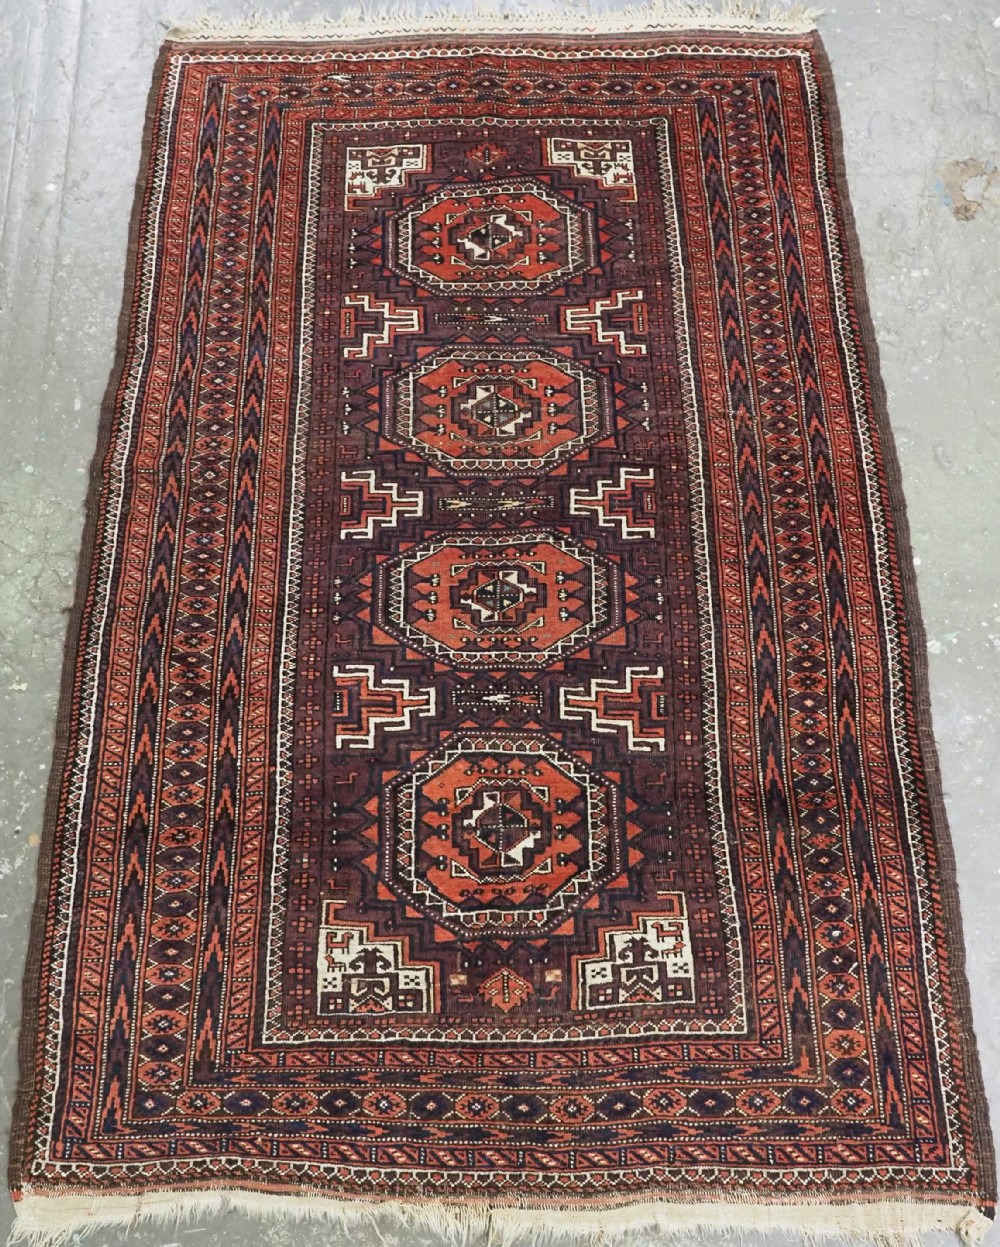 antique yaqoub khani baluch rug octogen design on aubergine ground circa 1900